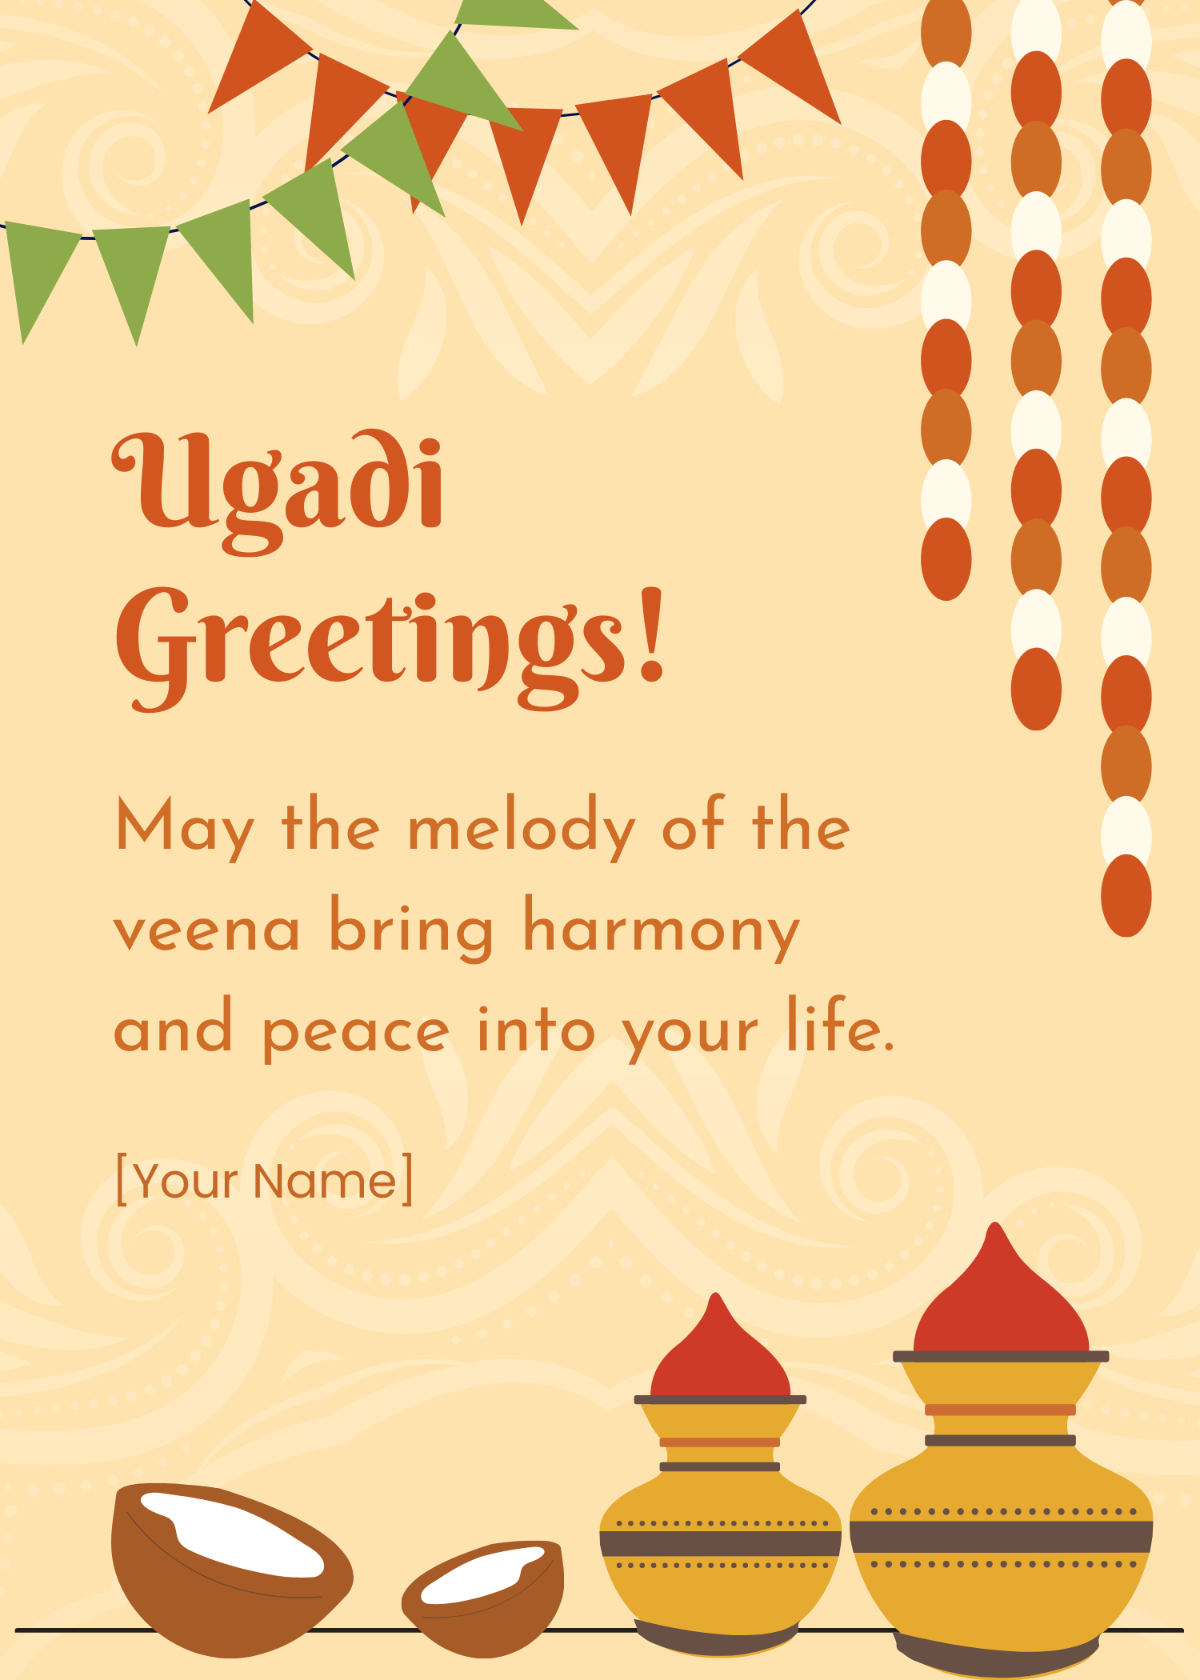 Ugadi Greetings